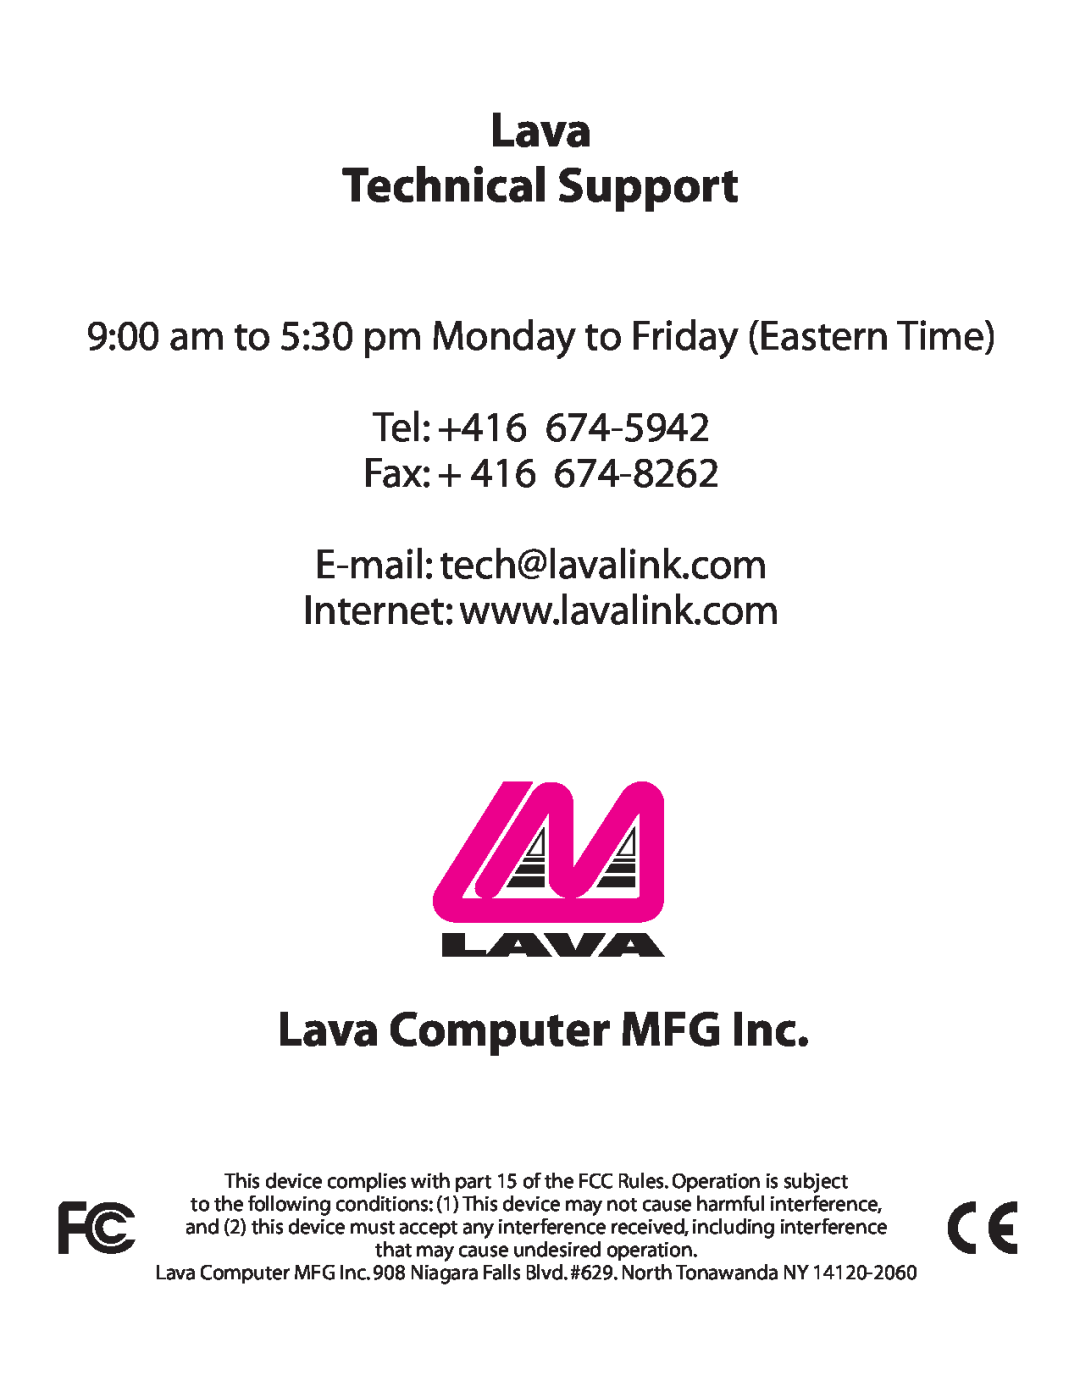 Lava Computer DSerial-PCI/LP Card manual Lava Technical Support, Lava Computer MFG Inc, E-mail tech@lavalink.com 